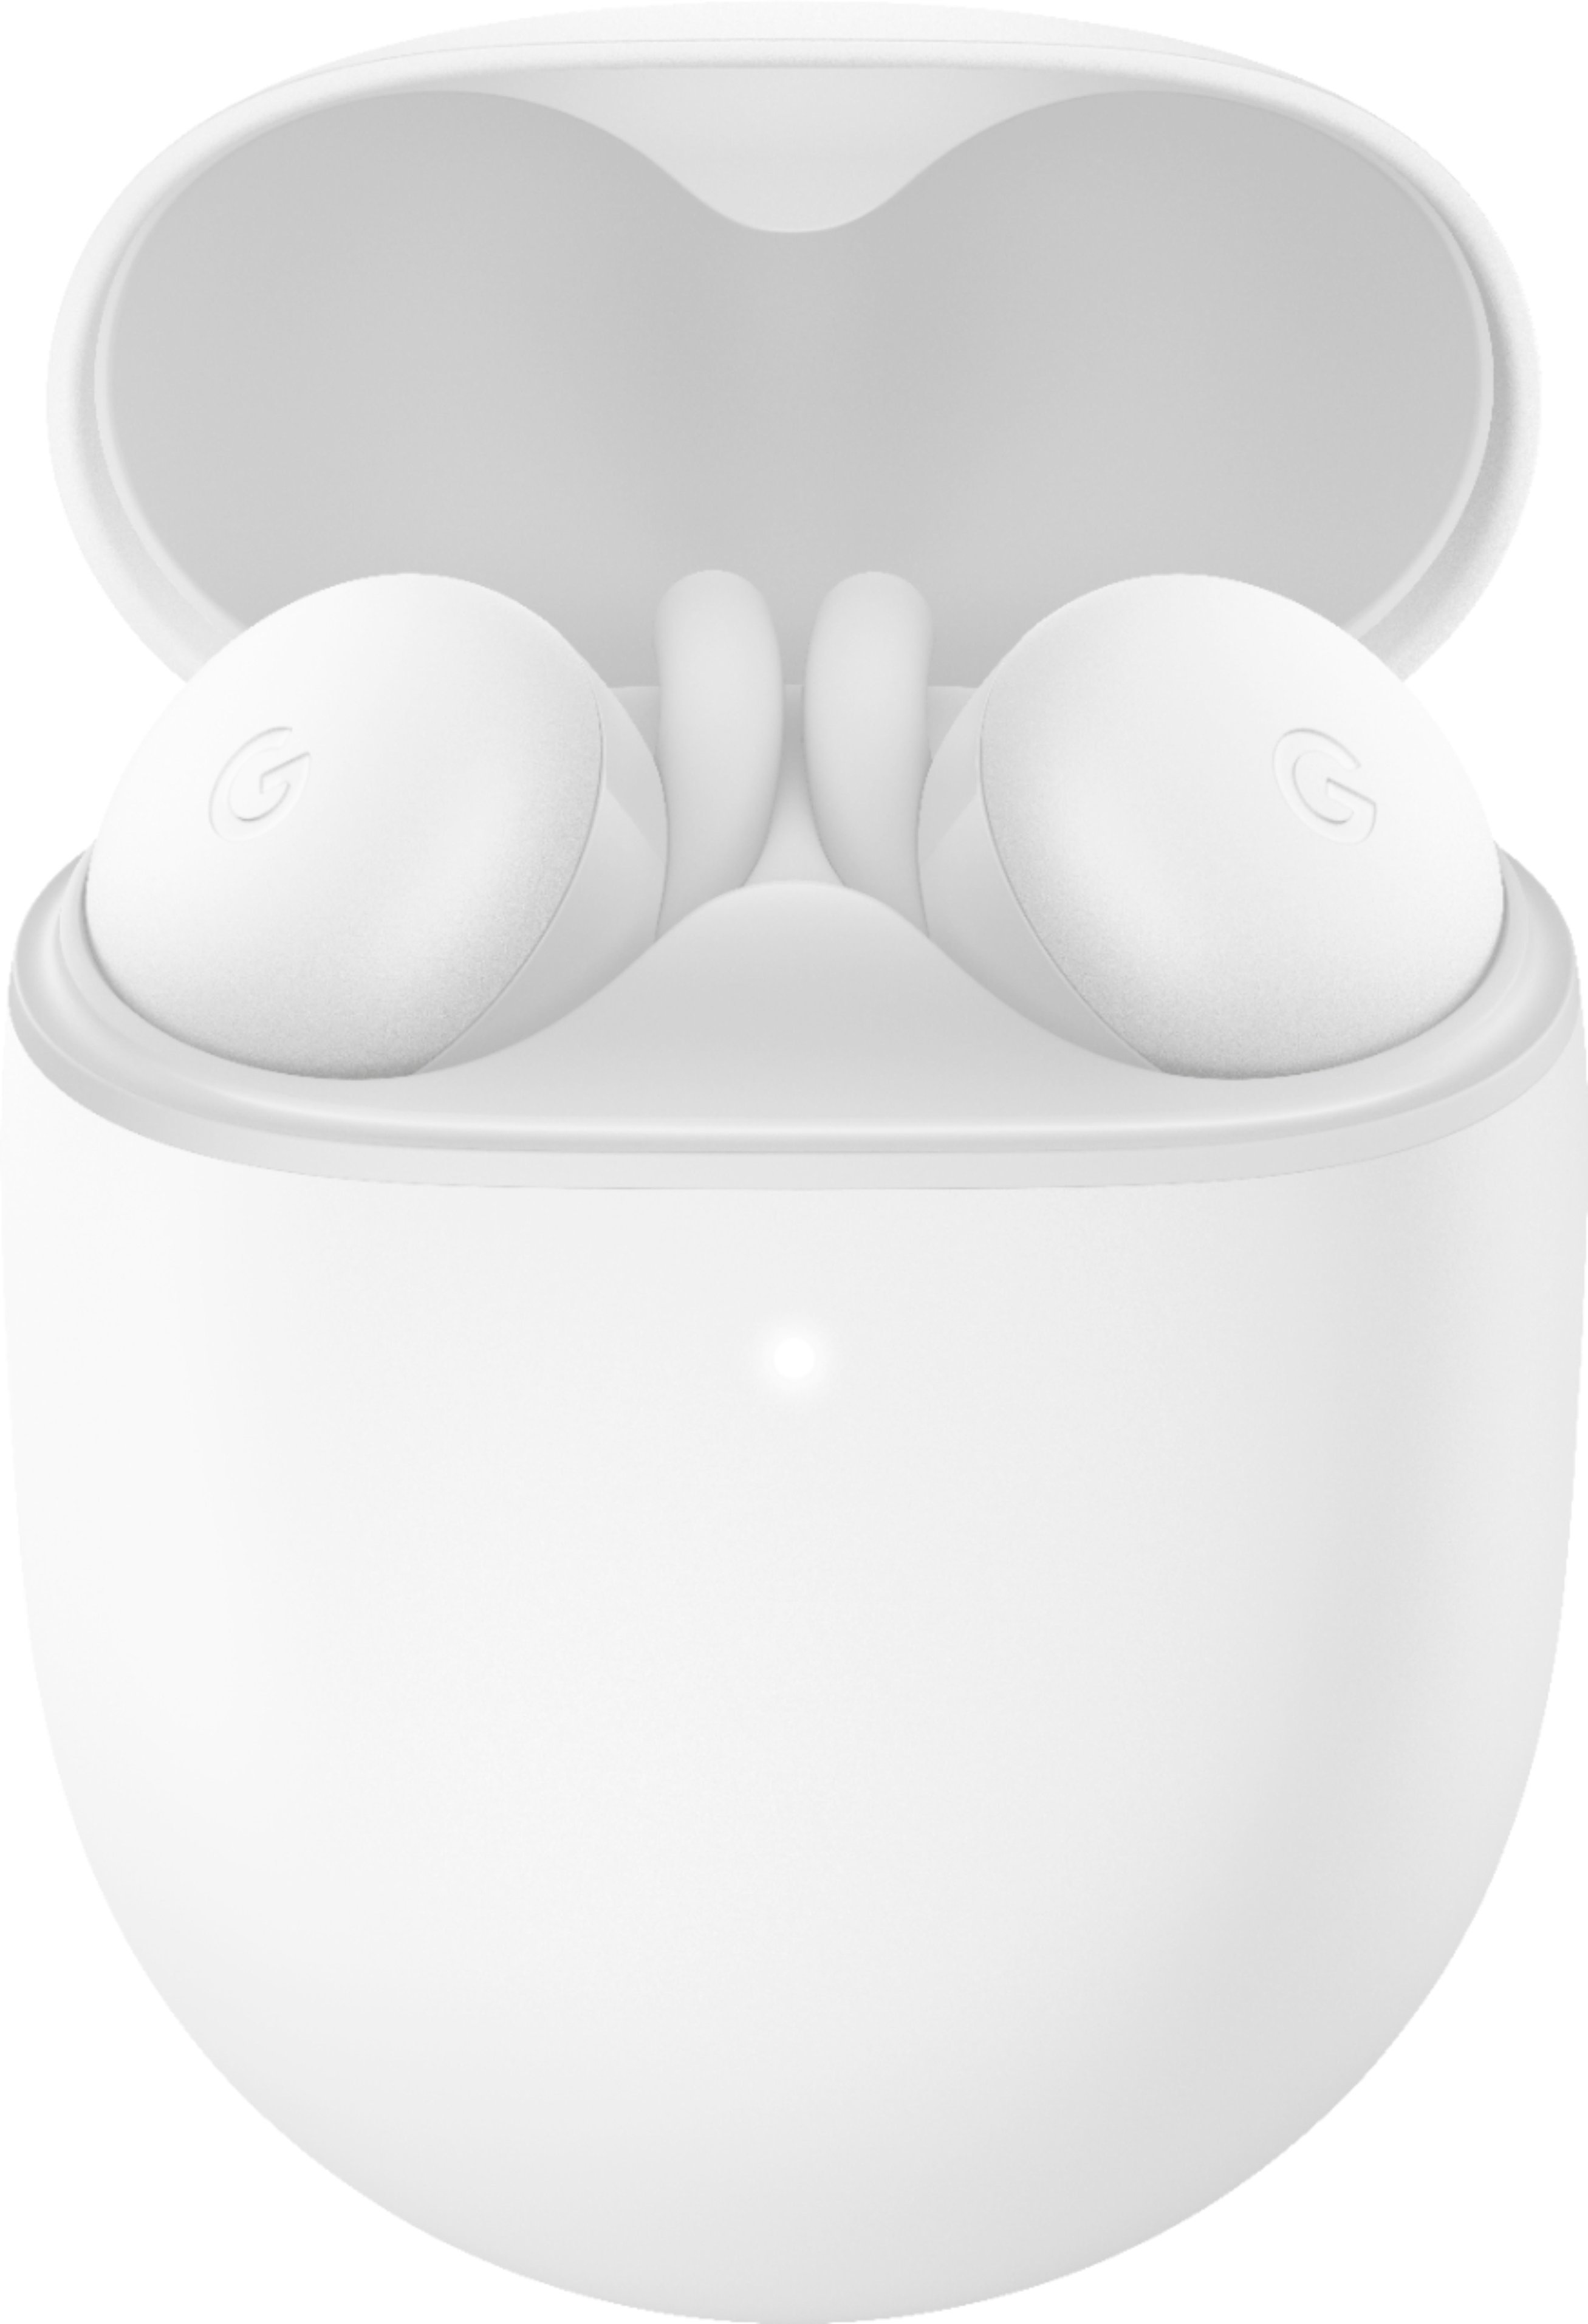 Google - Geek Squad Certified Refurbished Pixel Buds A-Series True Wireless In-Ear Headphones - Clearly White